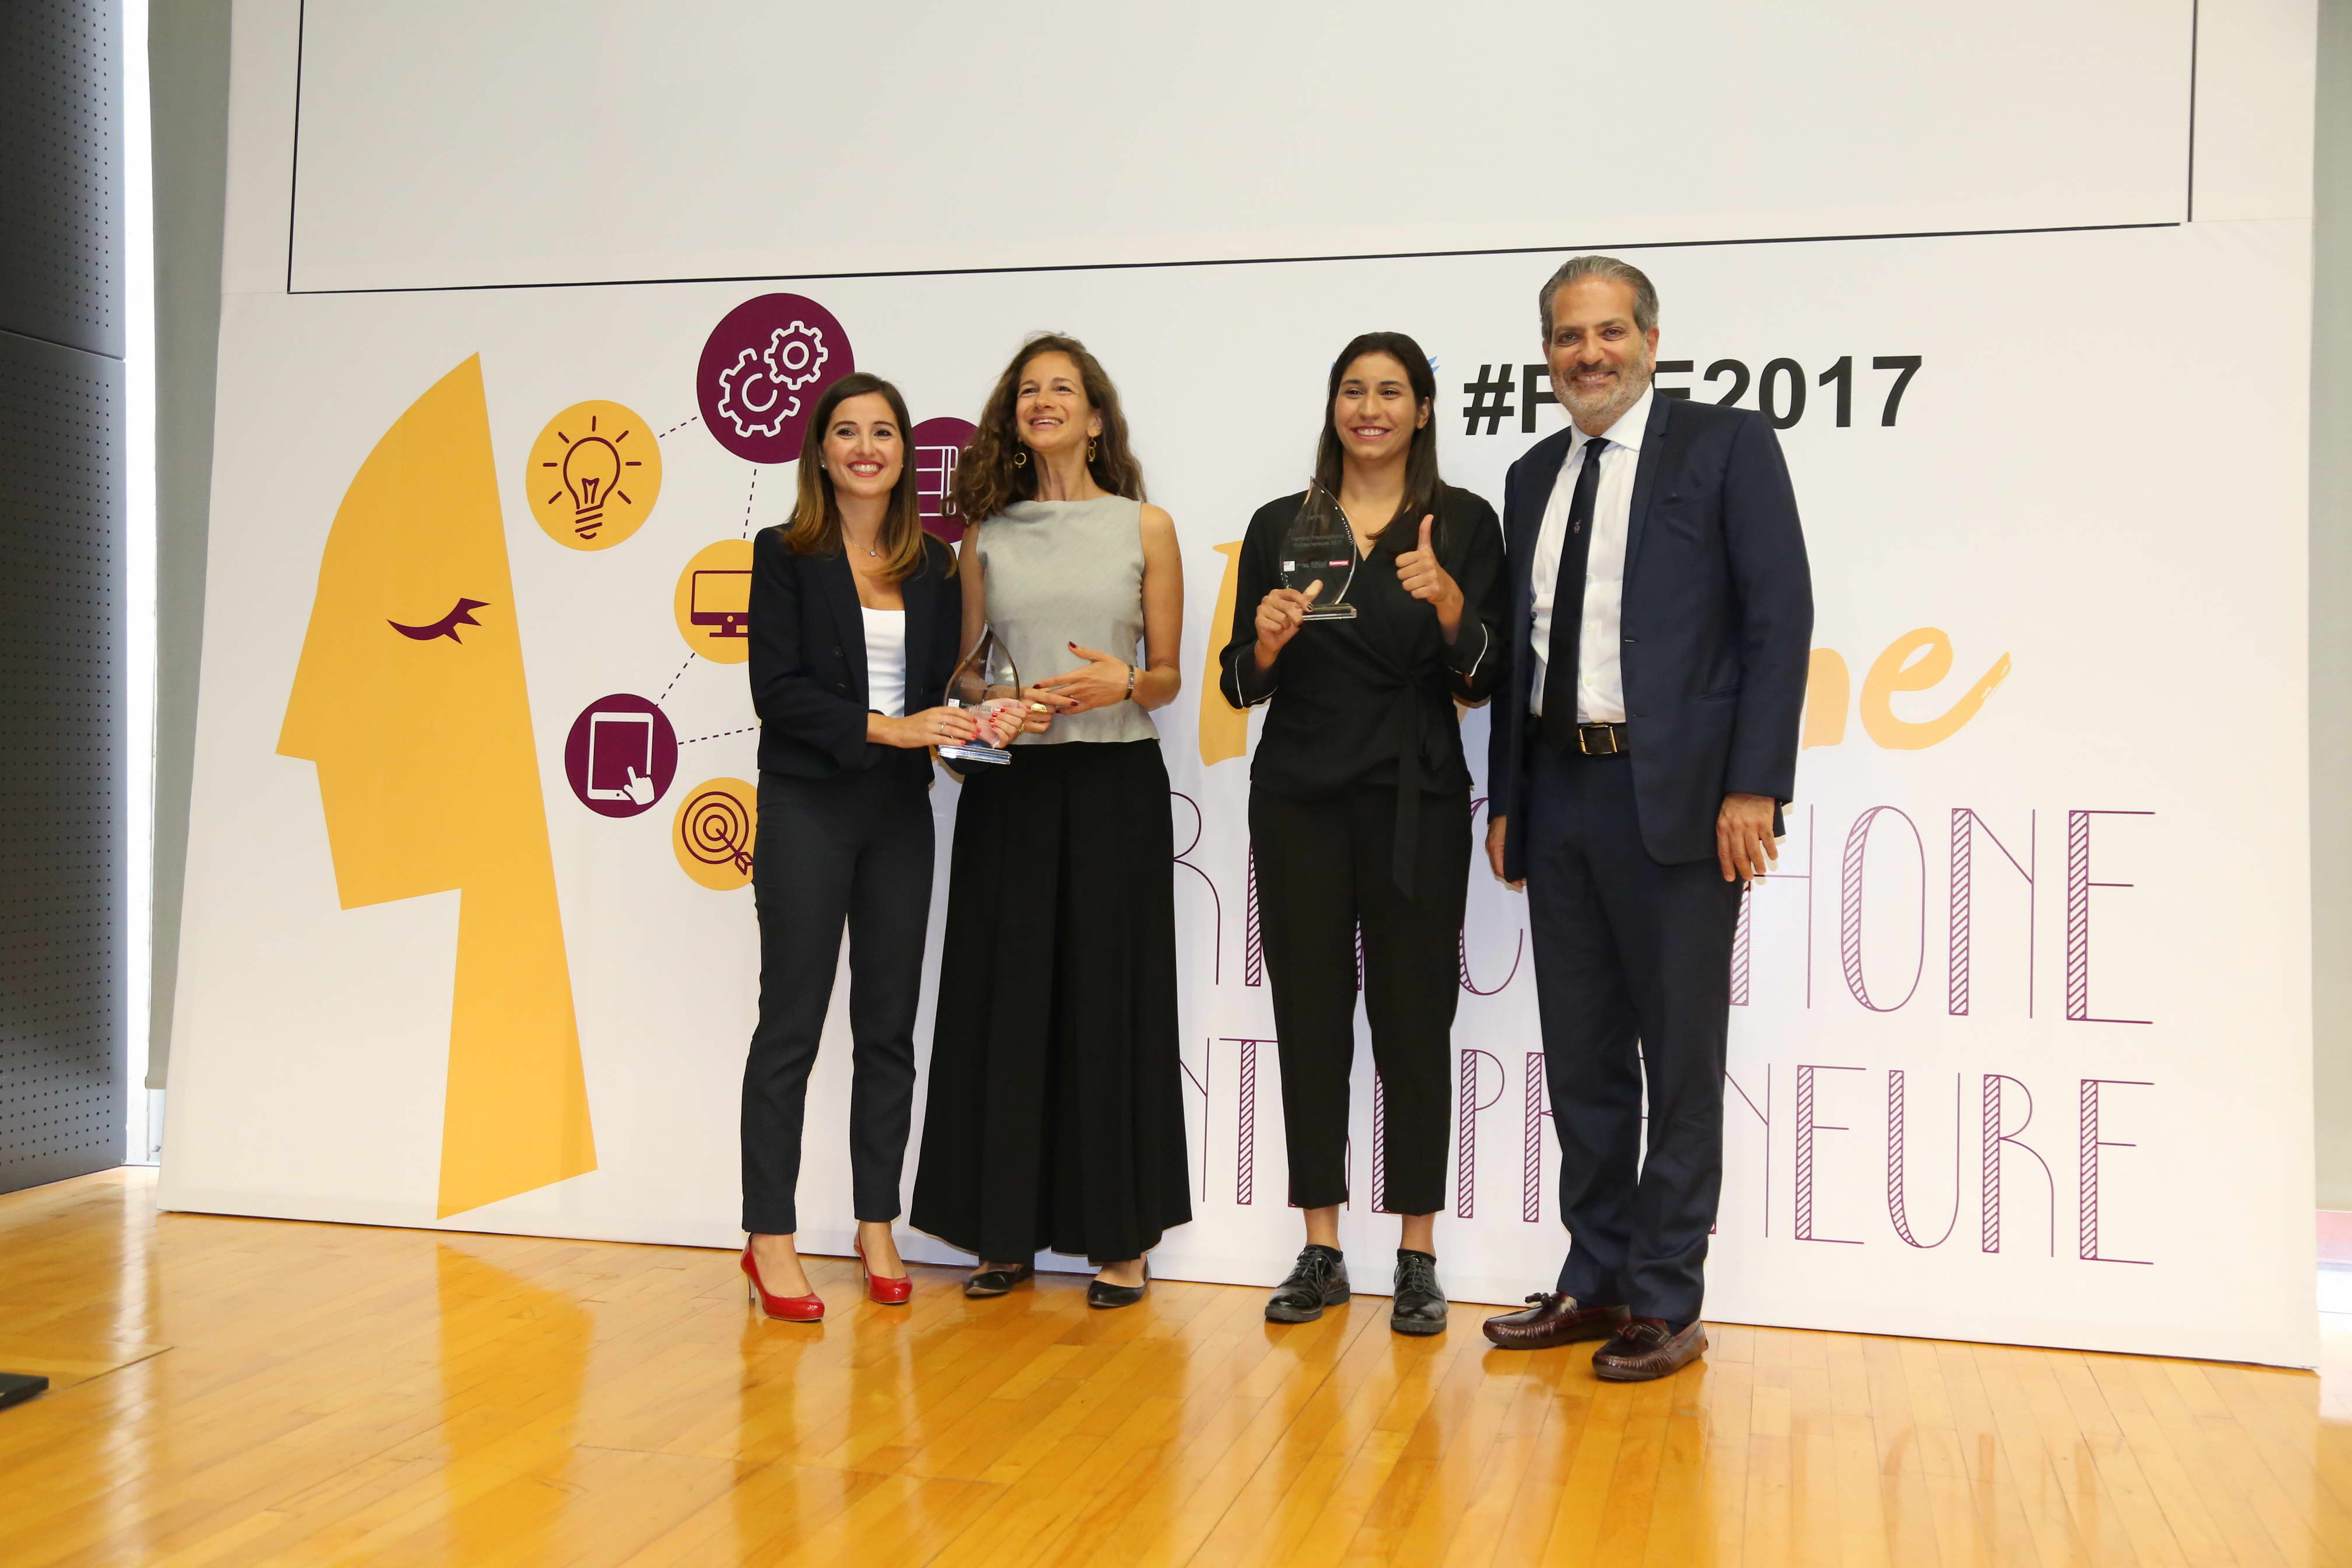 FFE2017 winners with Berytech CEO Maroun Chammas